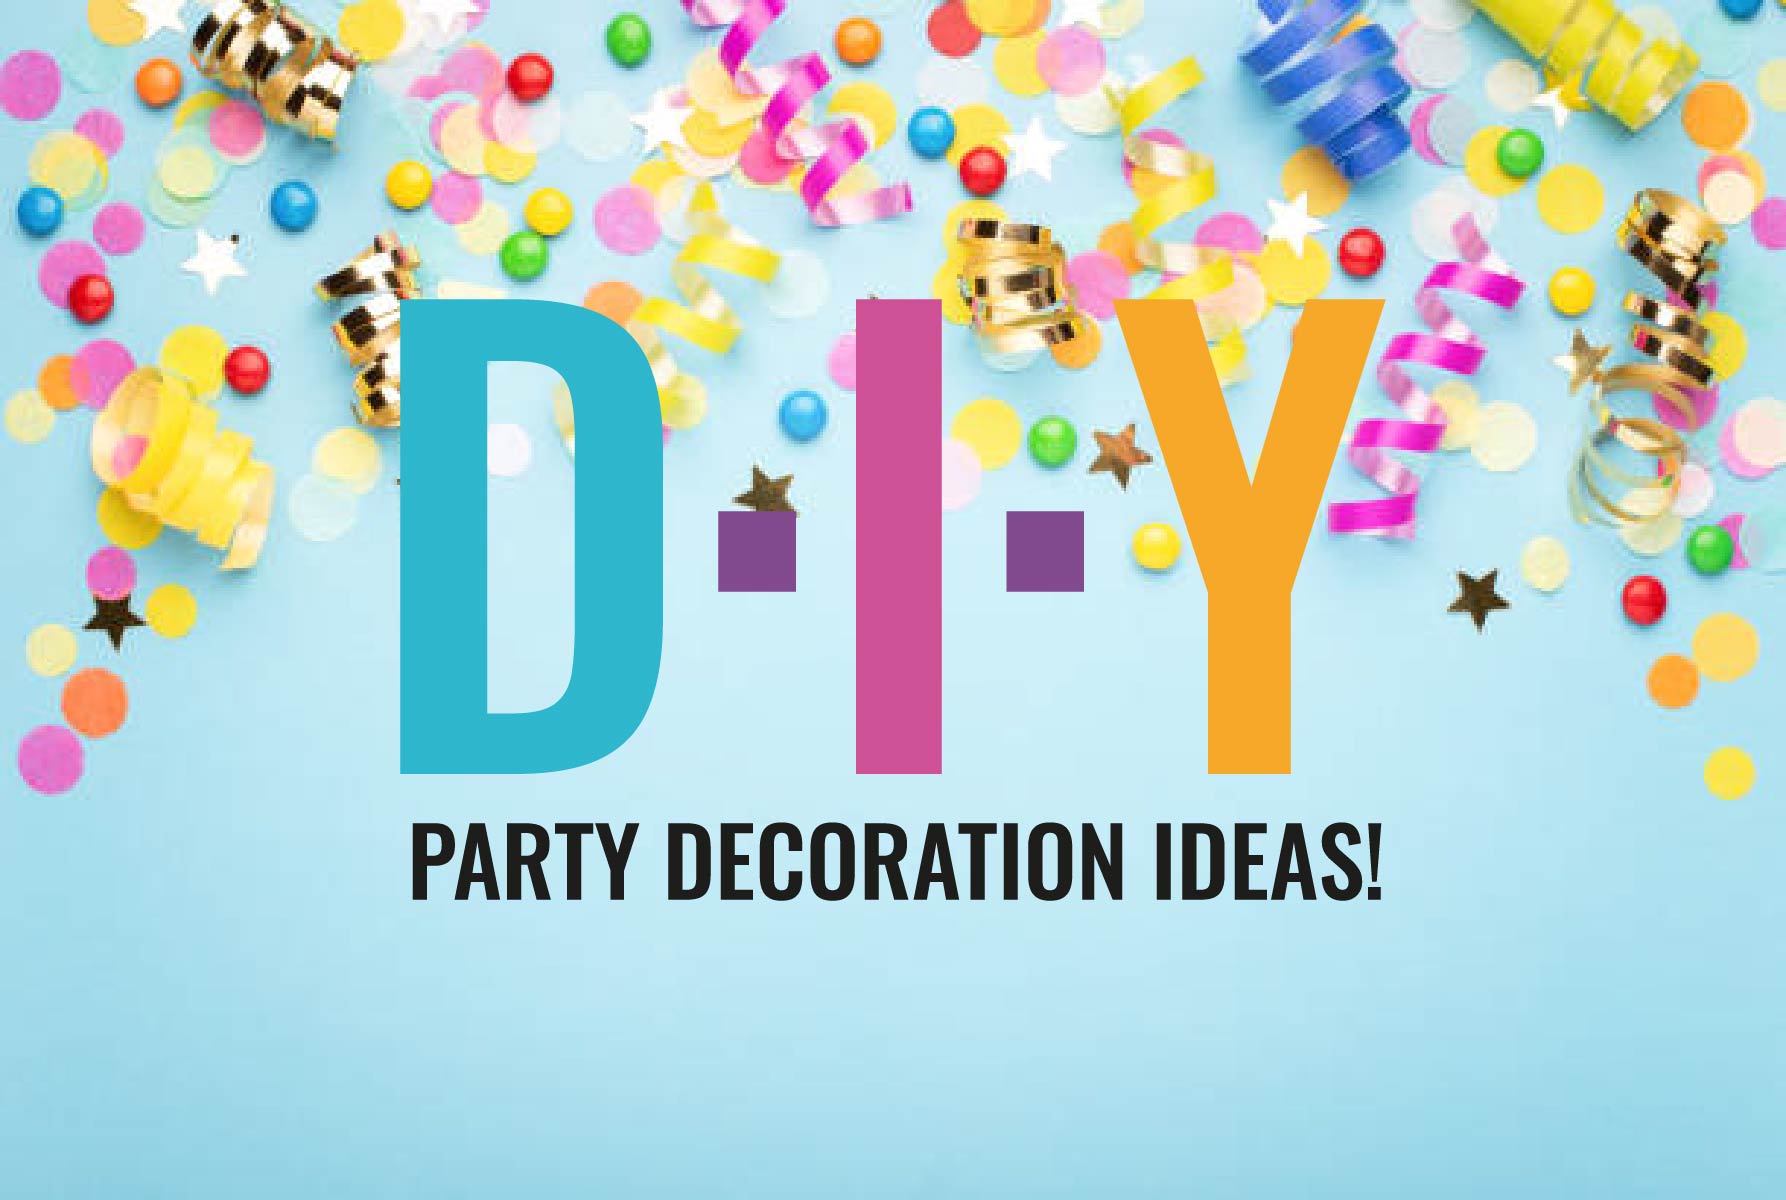 DIY party decoration ideas